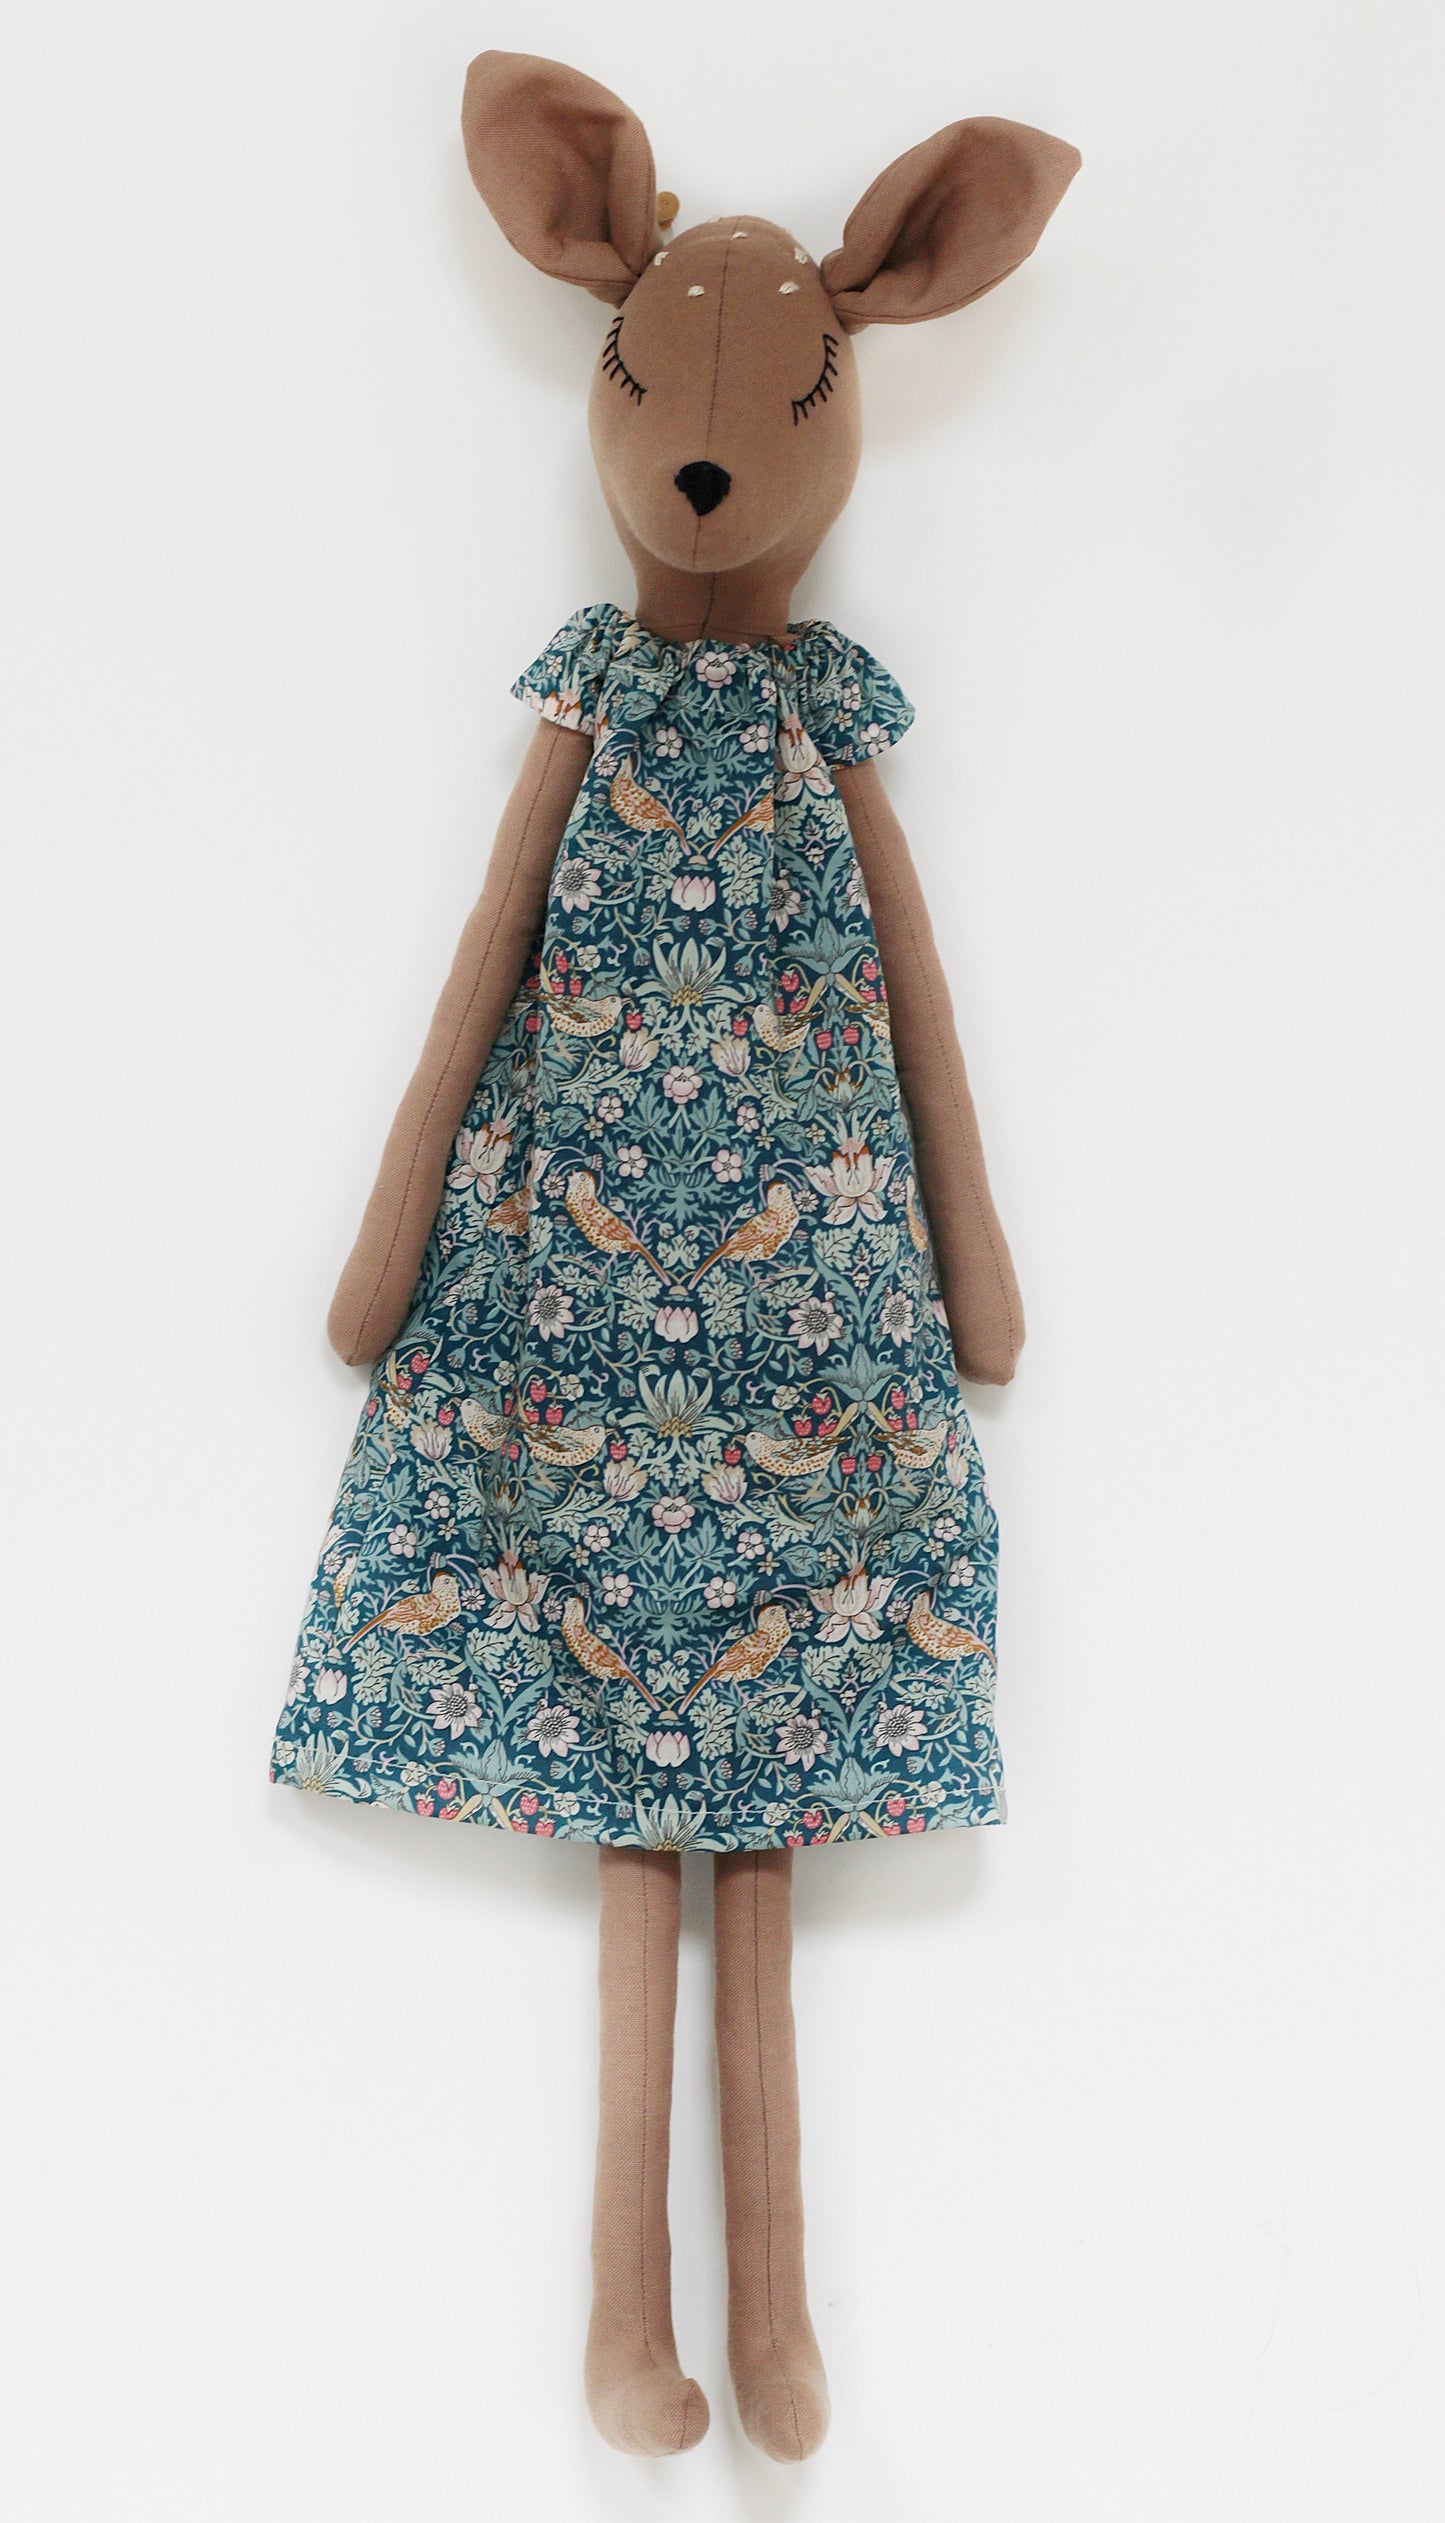 EFI Fawn 55 cm in Strawberry thief Liberty fabric dress